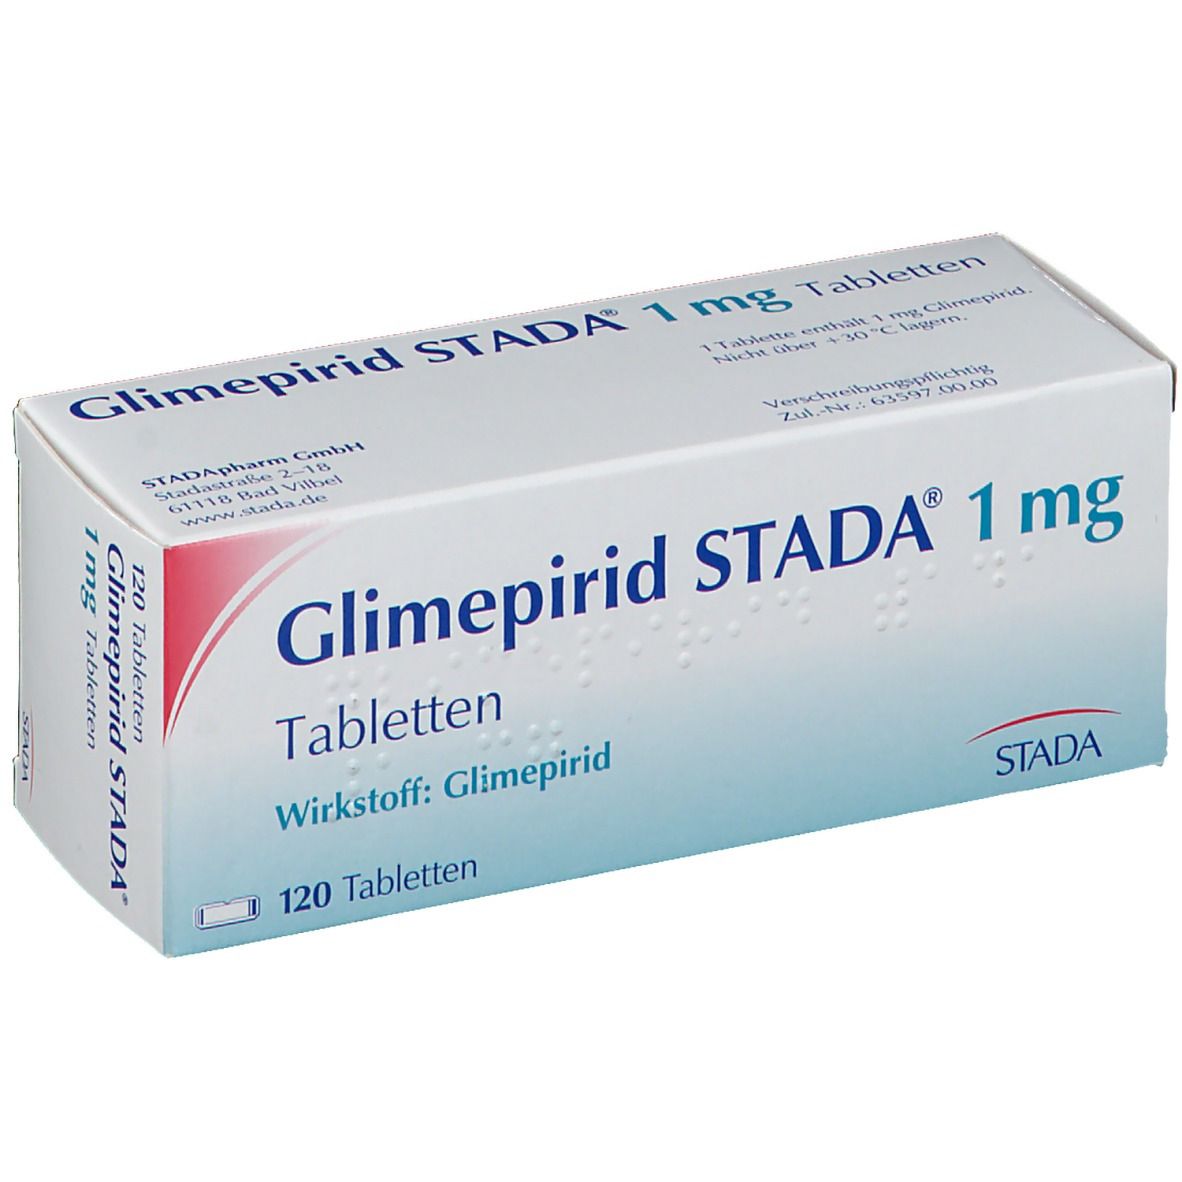 Glimepirid STADA® 1 mg